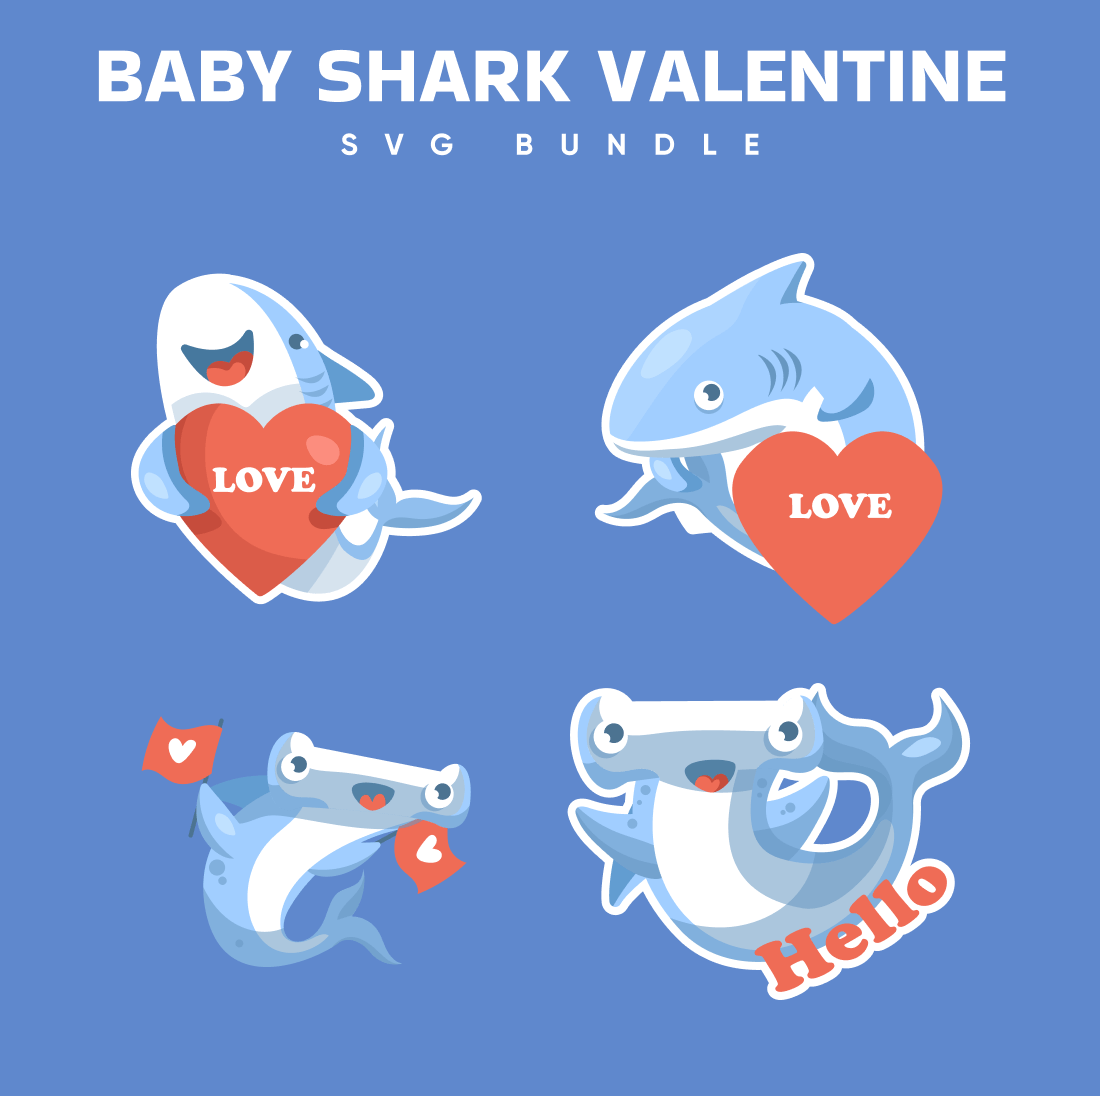 Baby shark valentine svg bundle.